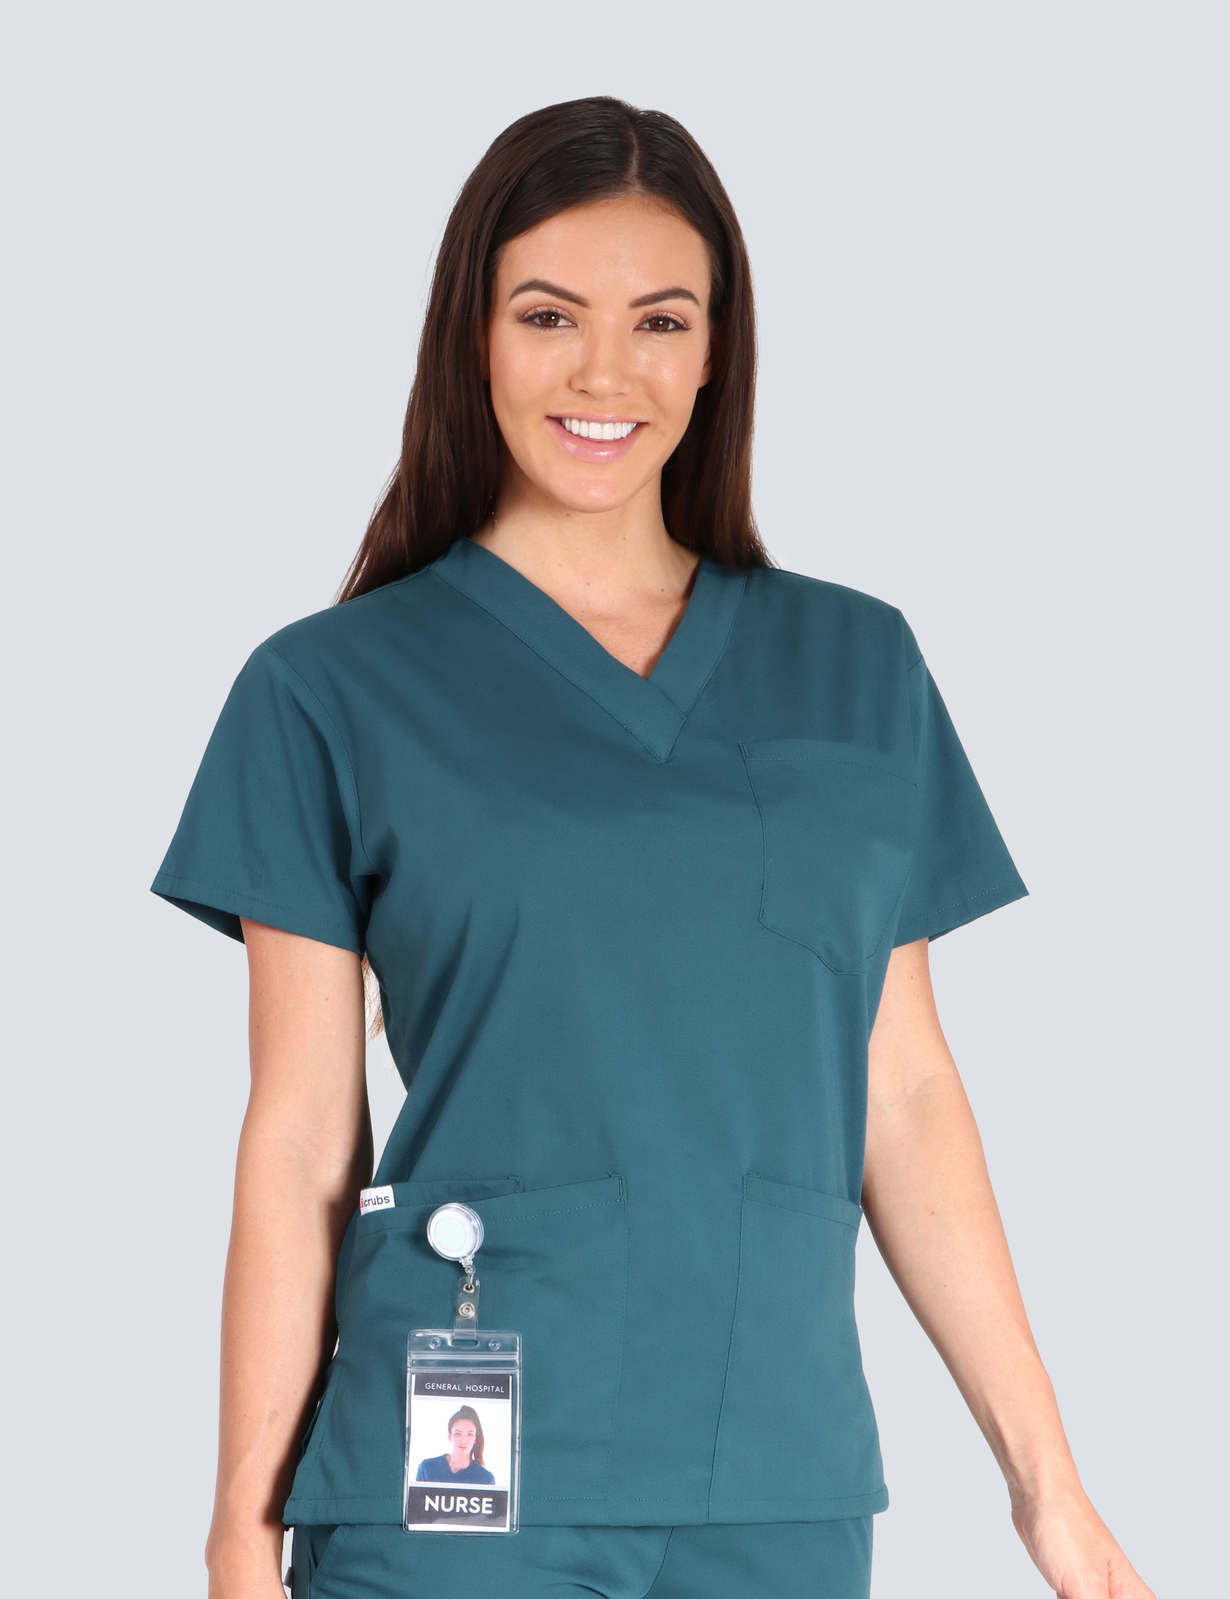 Flinders Medical Centre - Registered Nurse (4 Pocket Scrub Top in Caribbean incl Logos)